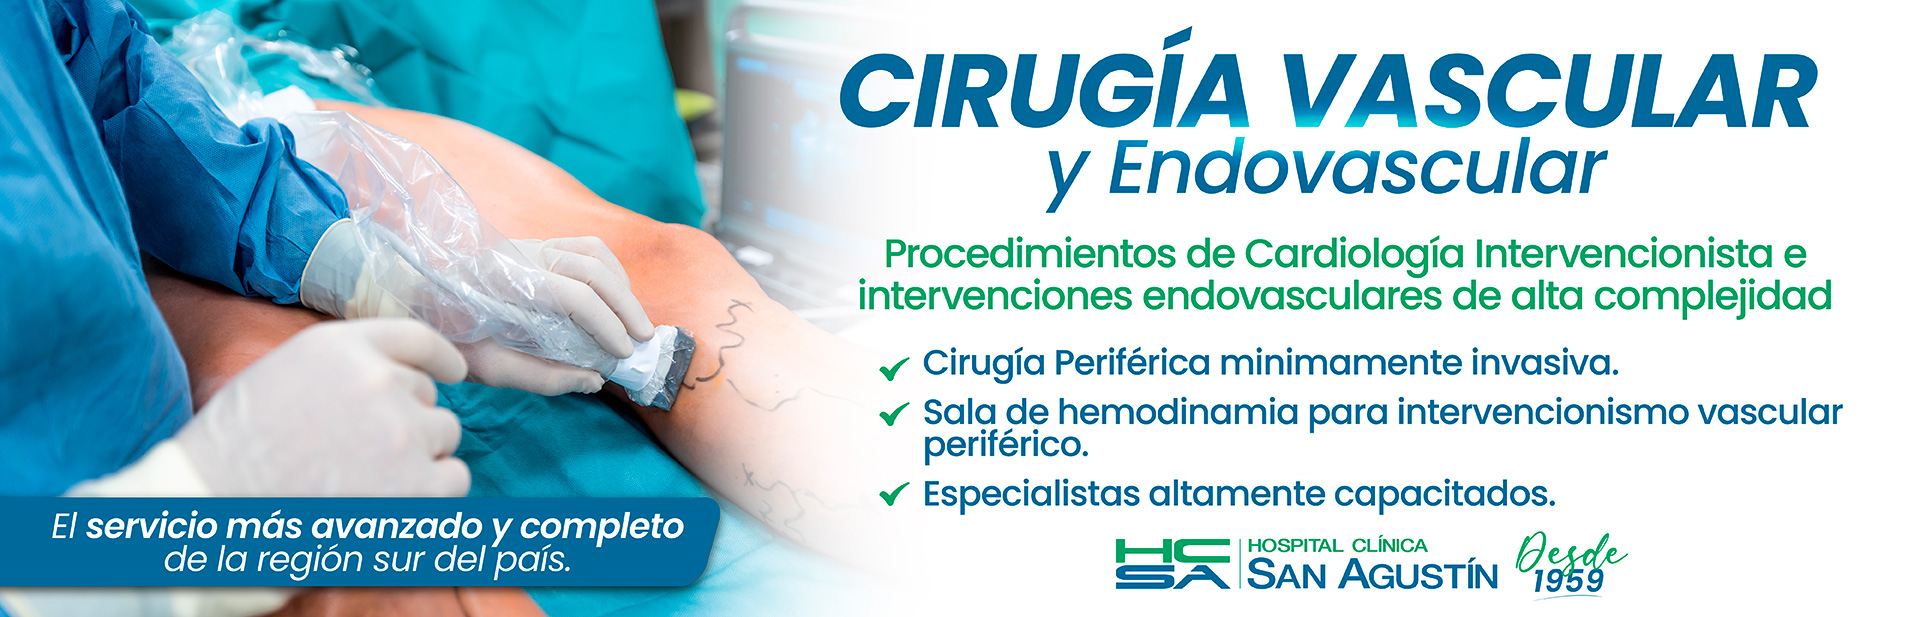 Cirugía Vascular y Endovascular | Hospital Clínica San Agustín